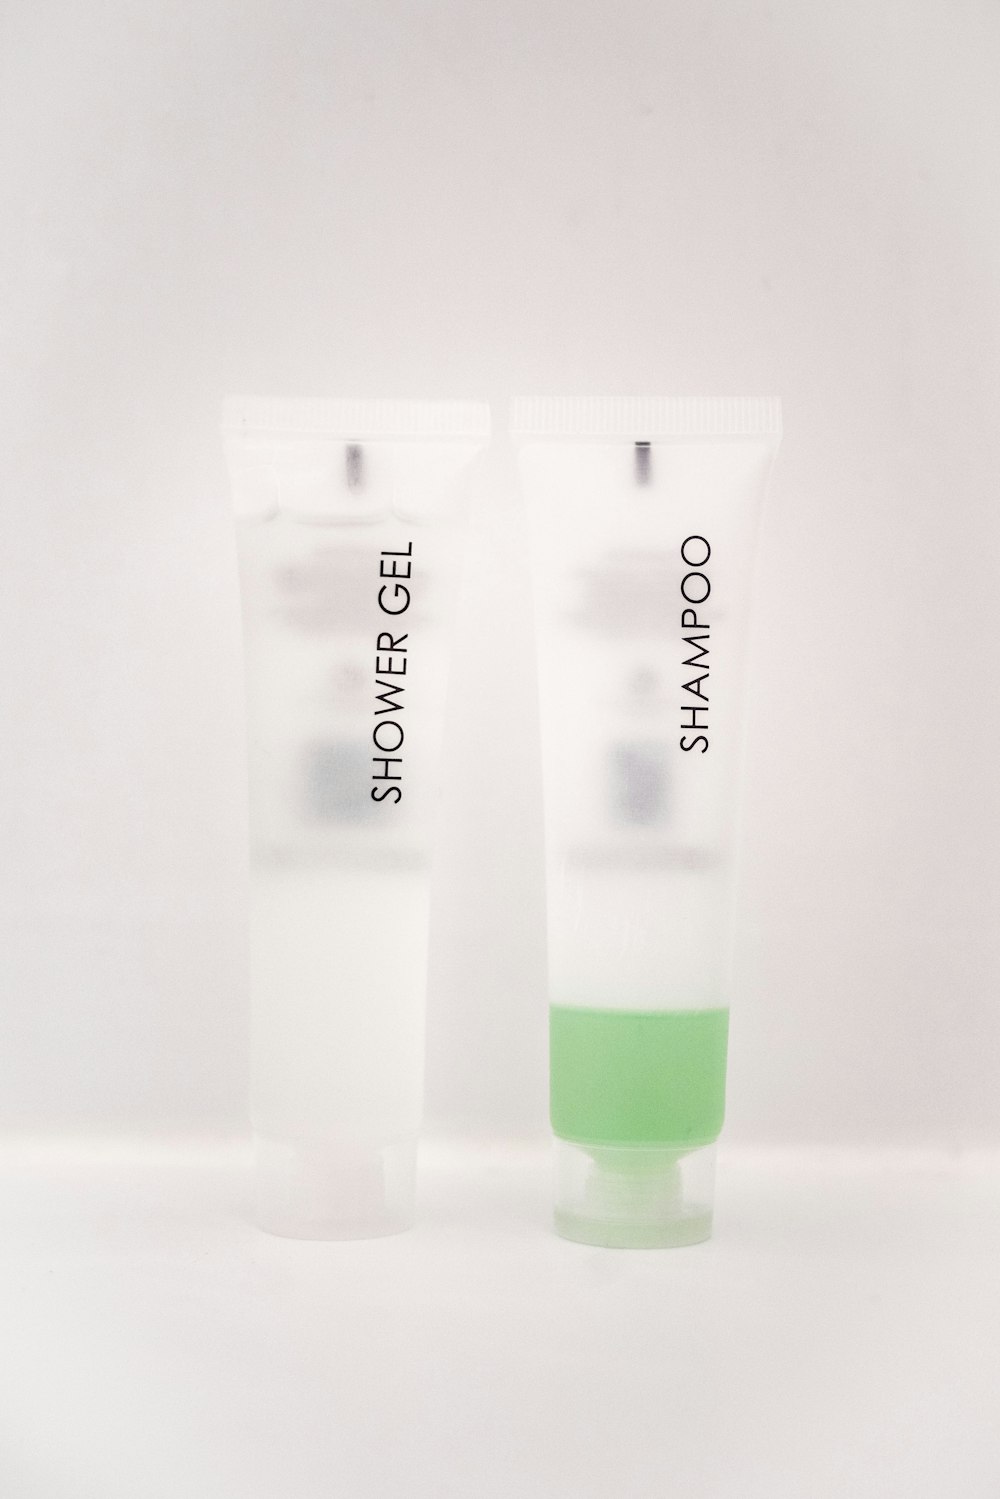 shower gel and shampoo soft-tube bottles on white surface